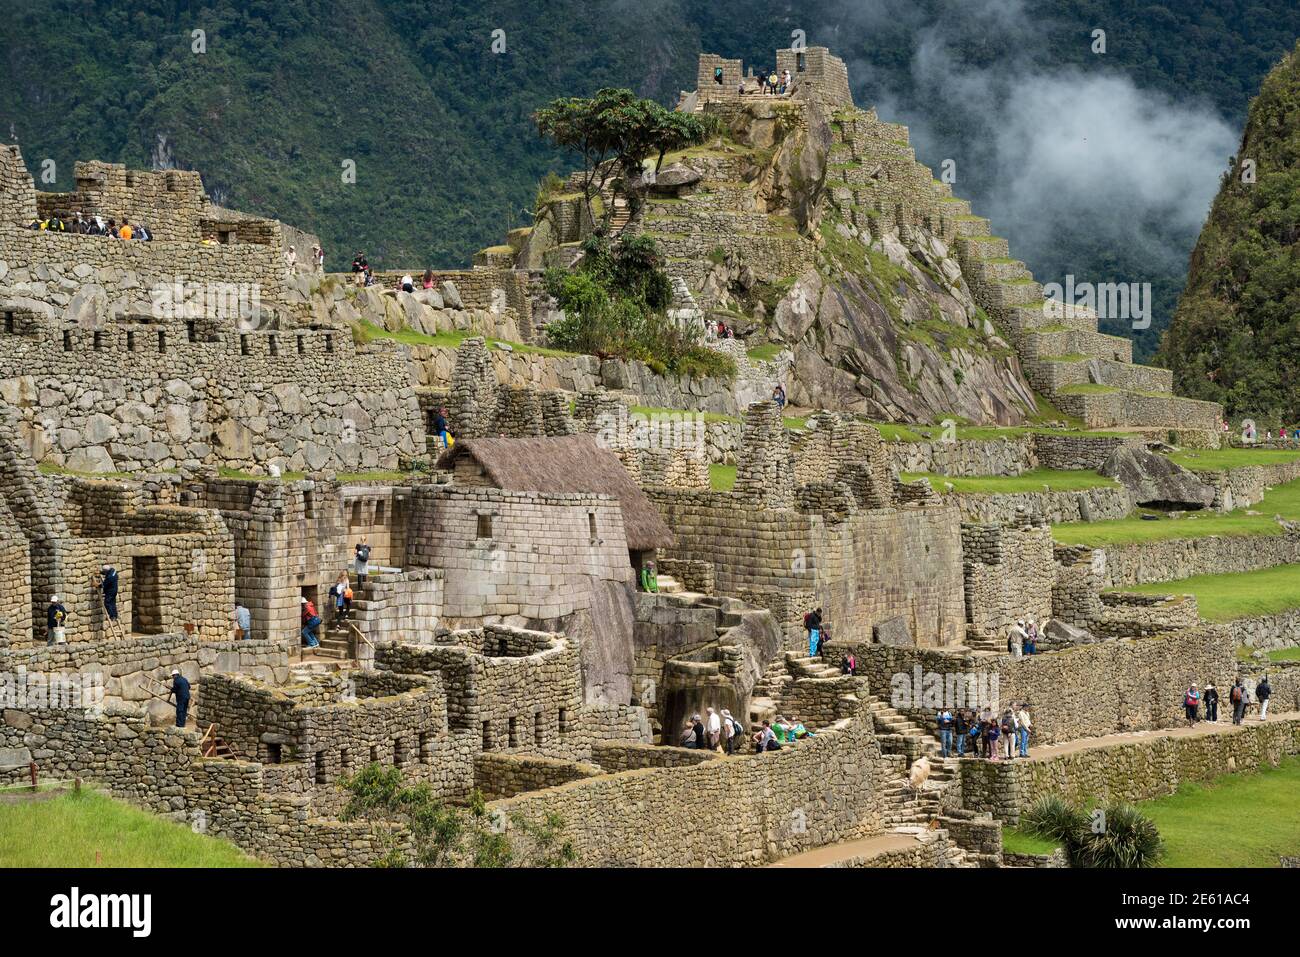 Visitors touring the Inca ruins at Machu Picchu, Peru. Stock Photo